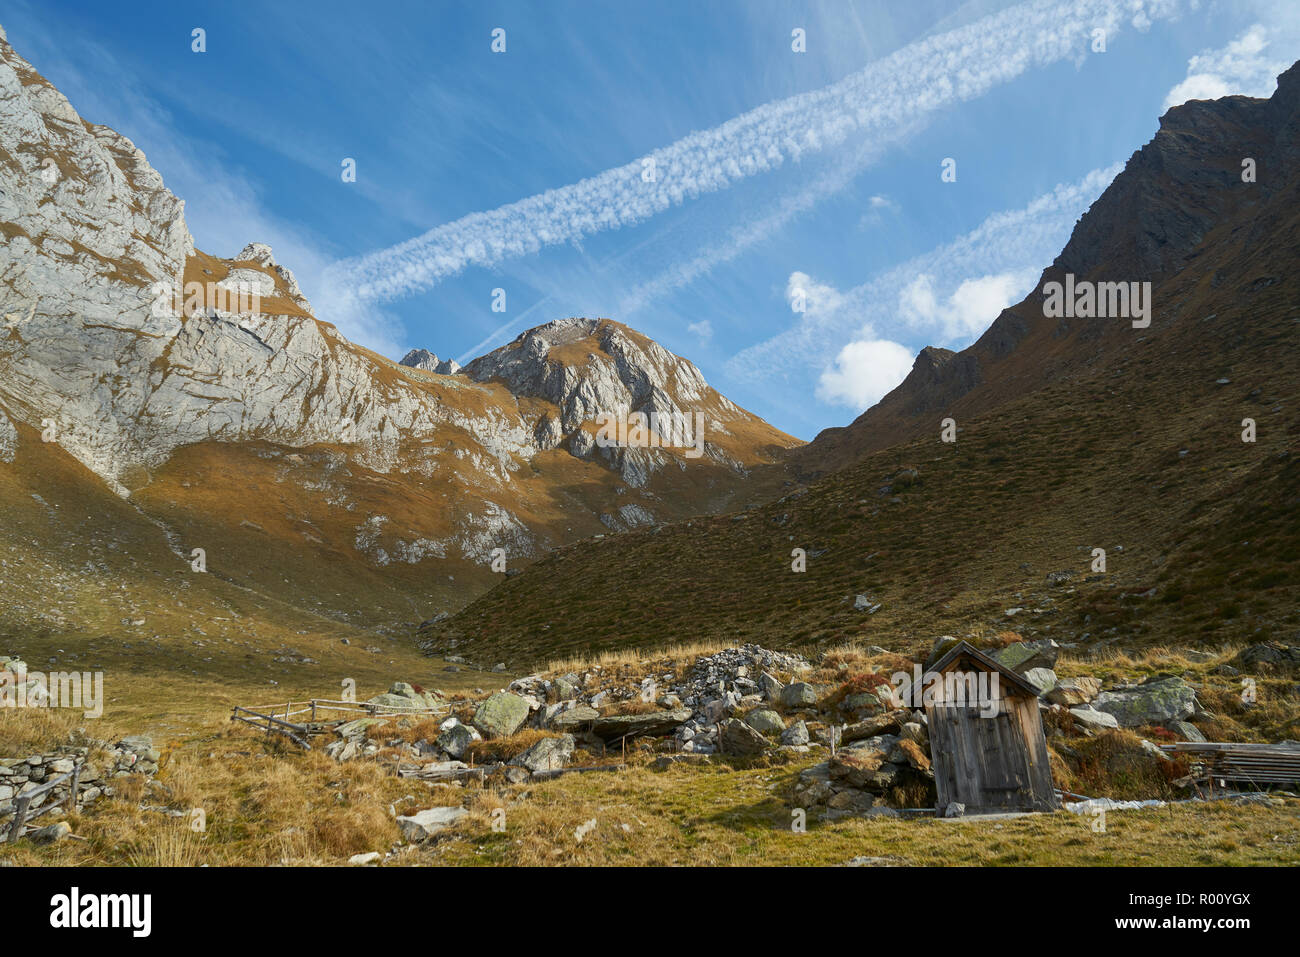 Pfundigerer dans les montagnes du Tyrol du Sud, Italie Banque D'Images